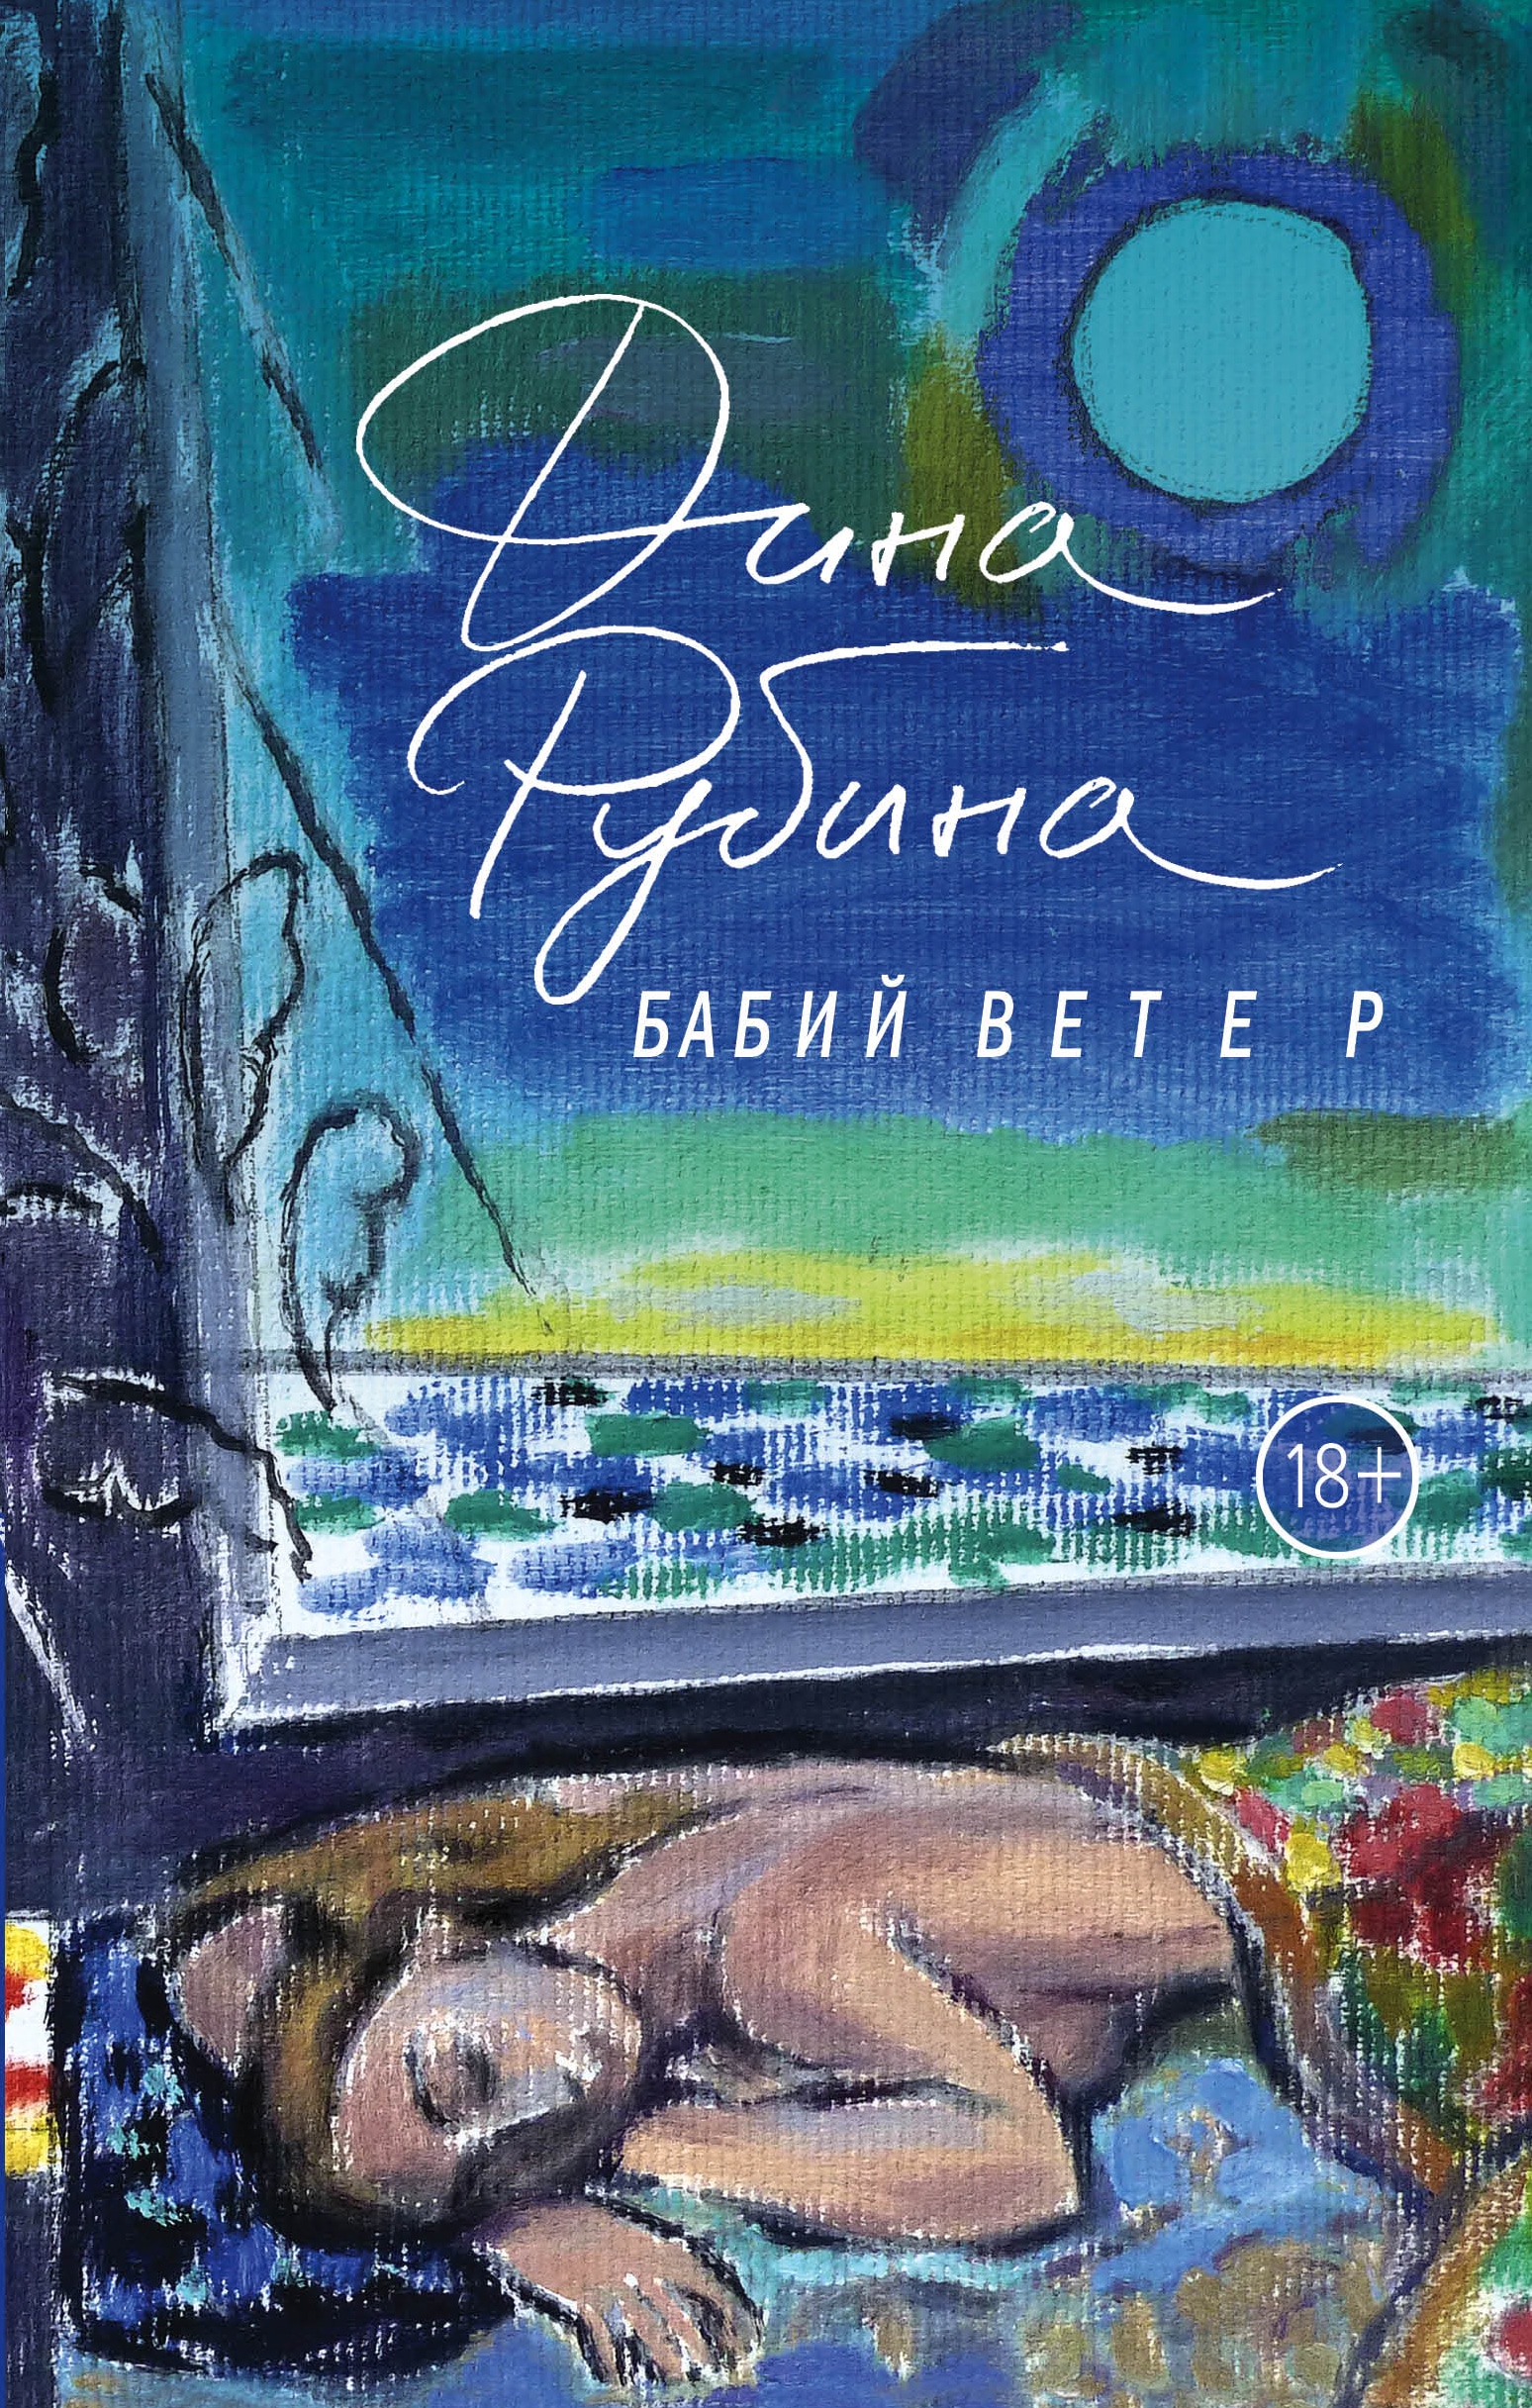 Book “Бабий ветер” by Дина Рубина — August 1, 2022